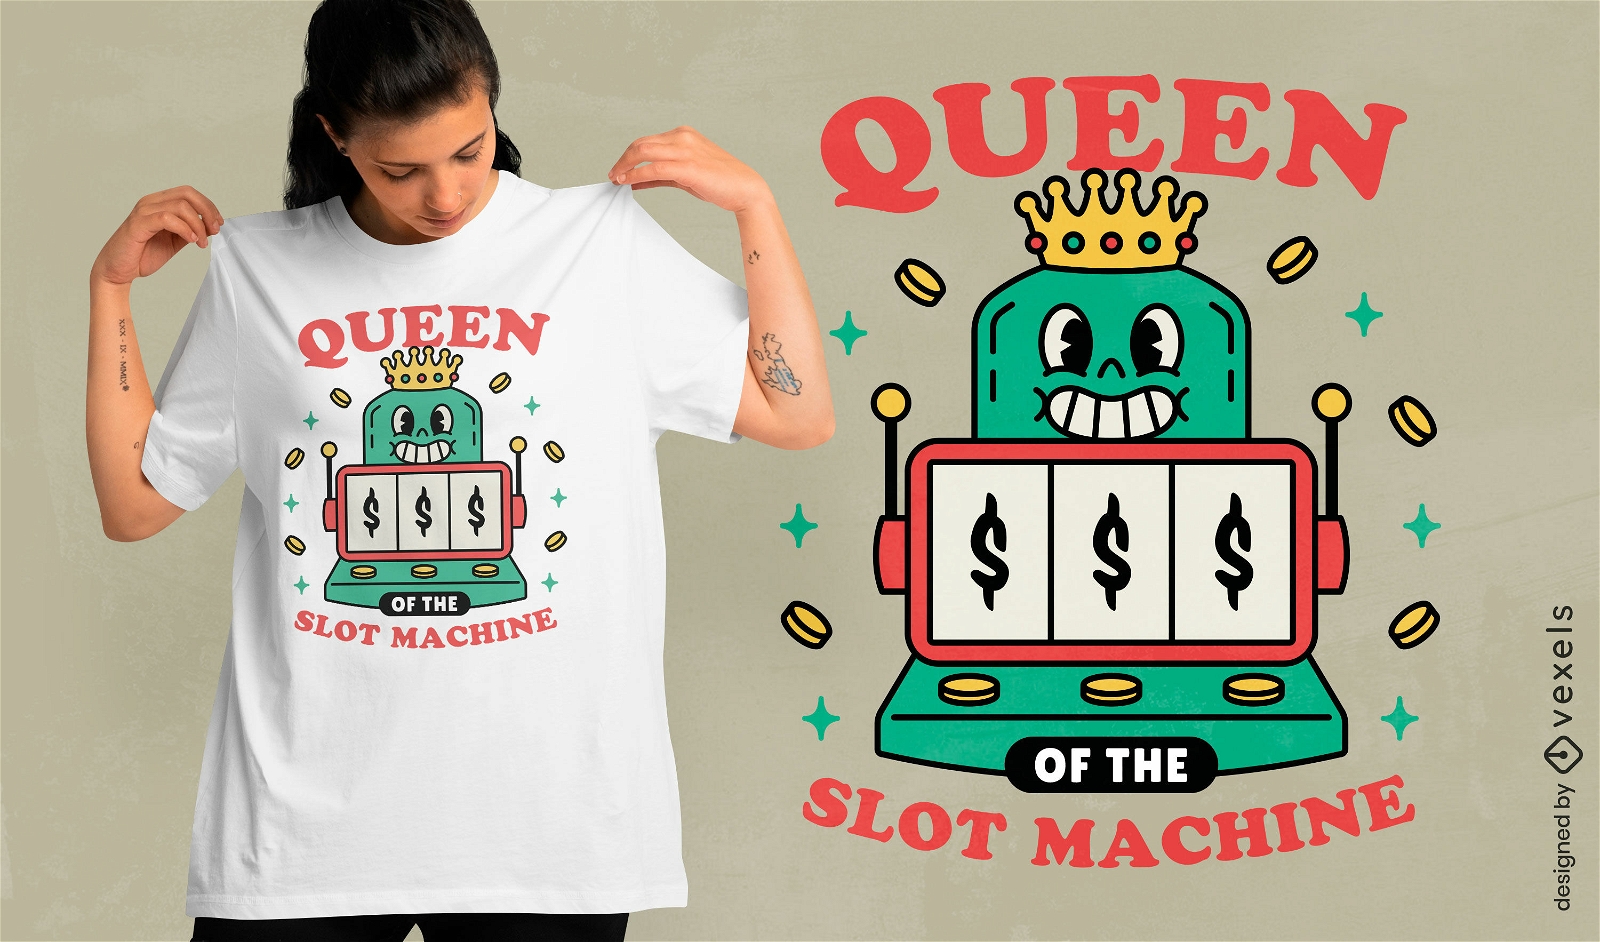 Slot machine queen t-shirt design